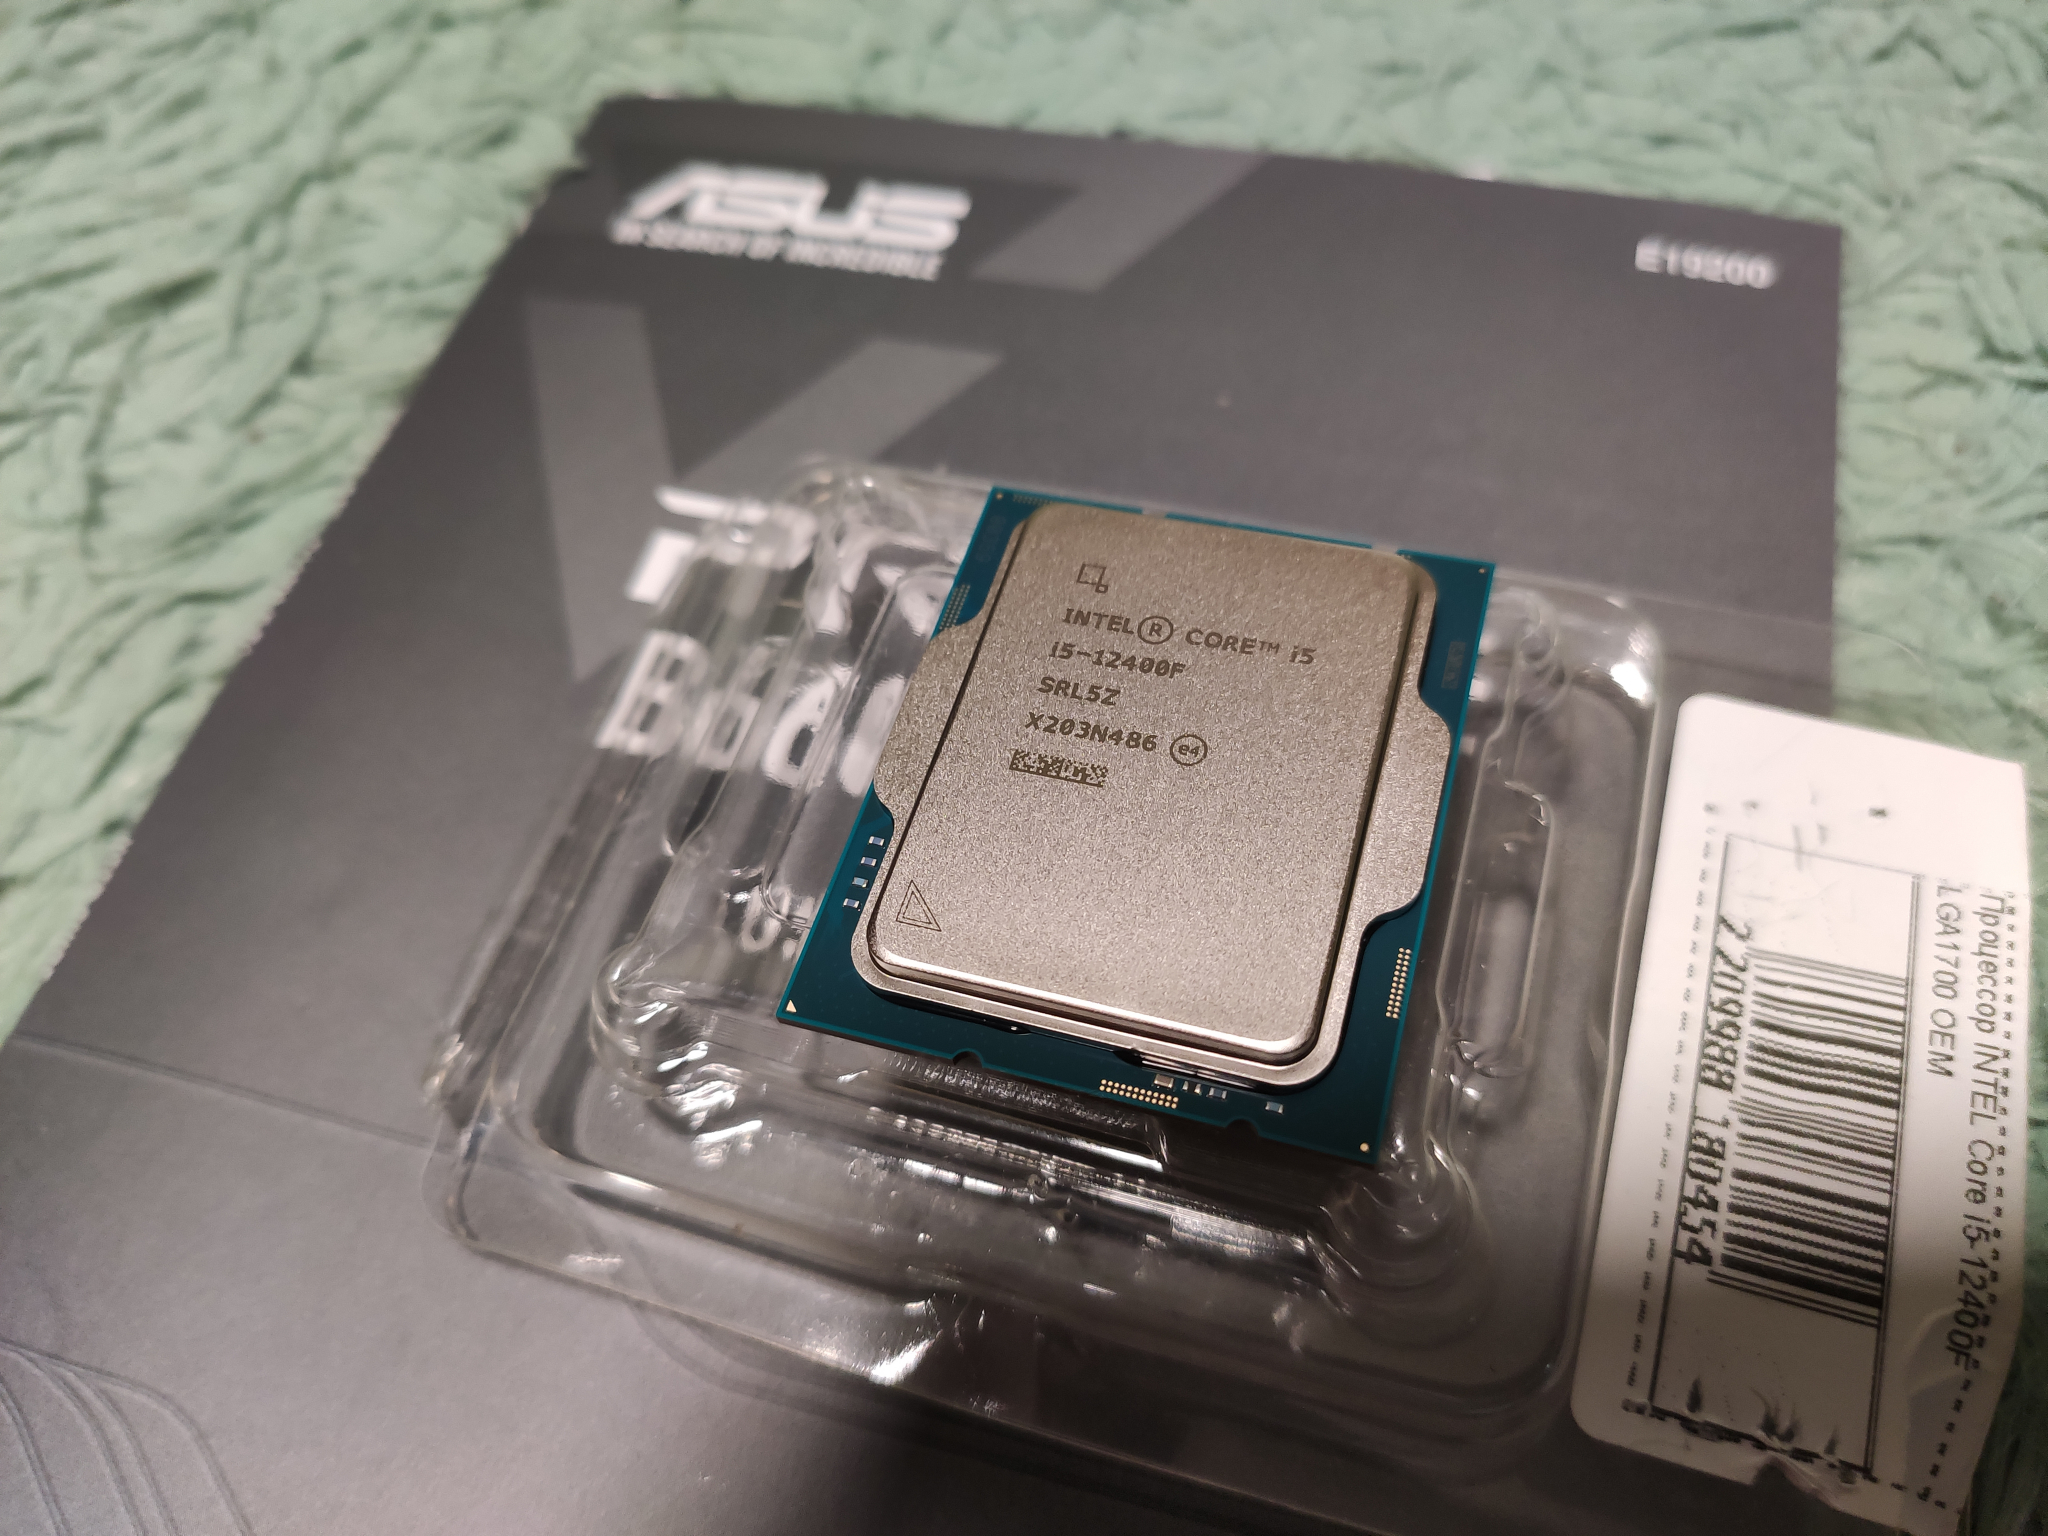 Intel Core i5-12400F review